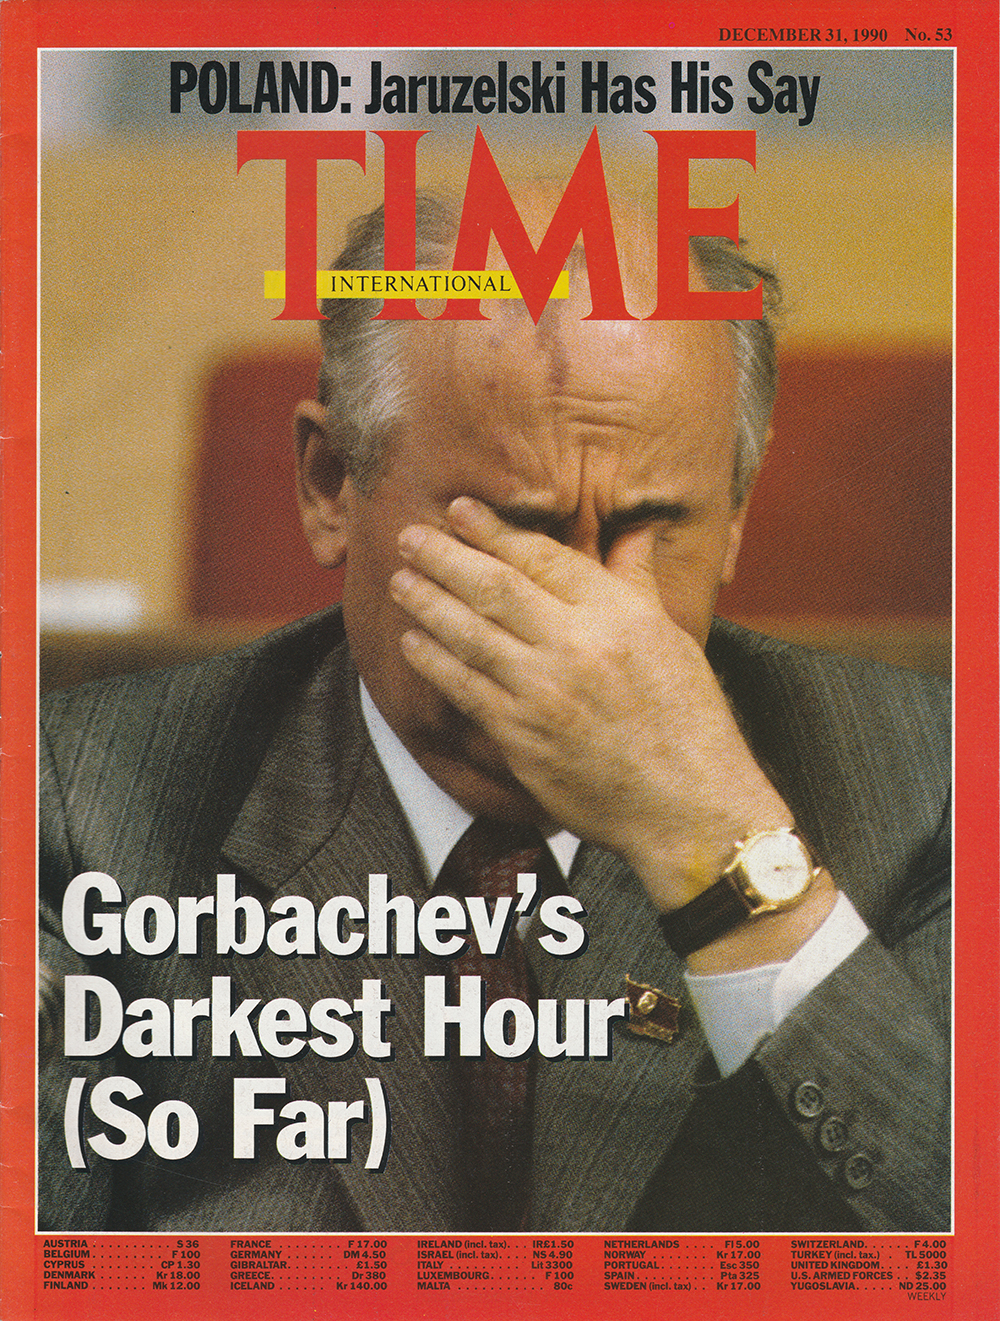 Couverture du magazine Time avec Gorbatchev